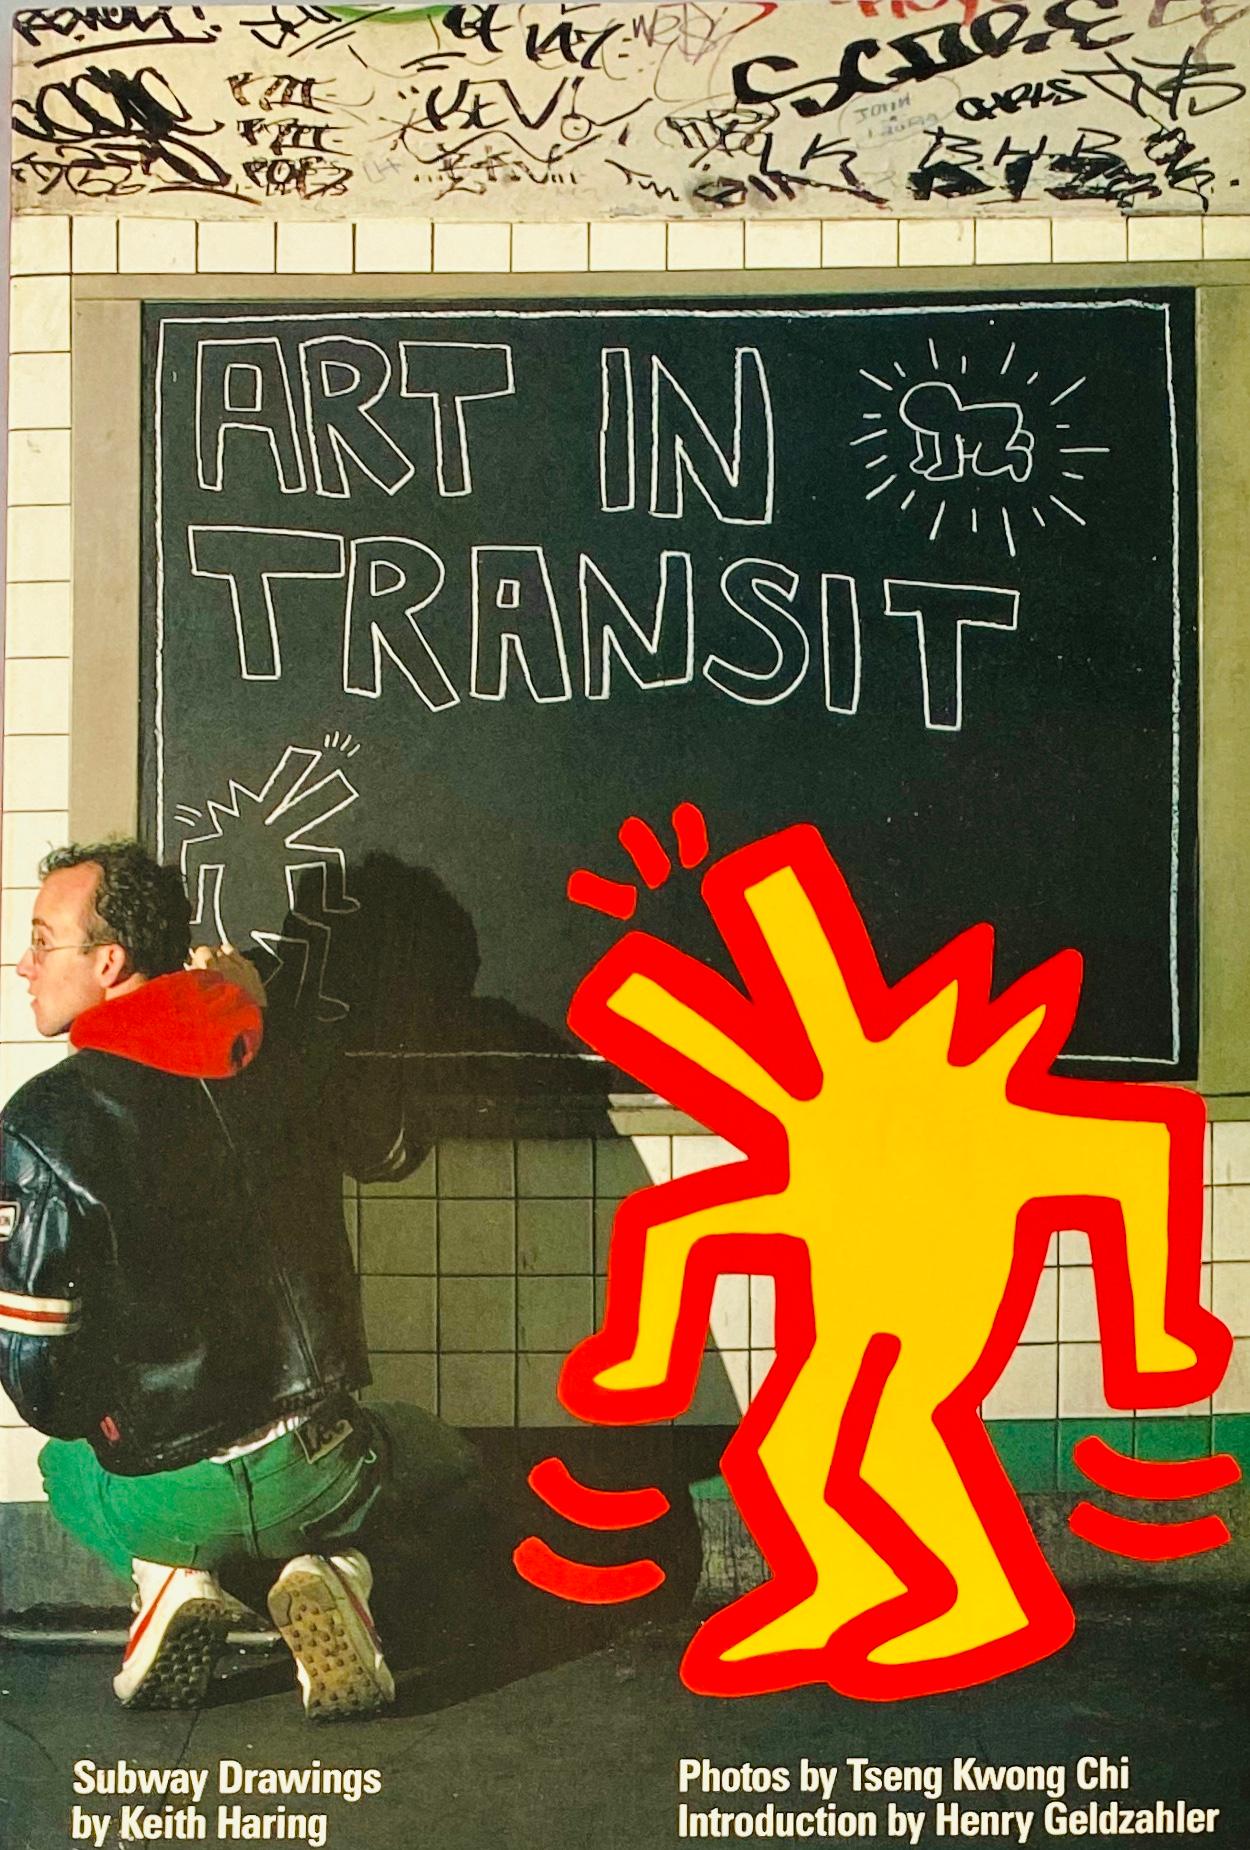 Keith Haring Art in Transit 1984 (livre de Keith Haring Tseng Kwong Chi)  - Photograph de (after) Keith Haring